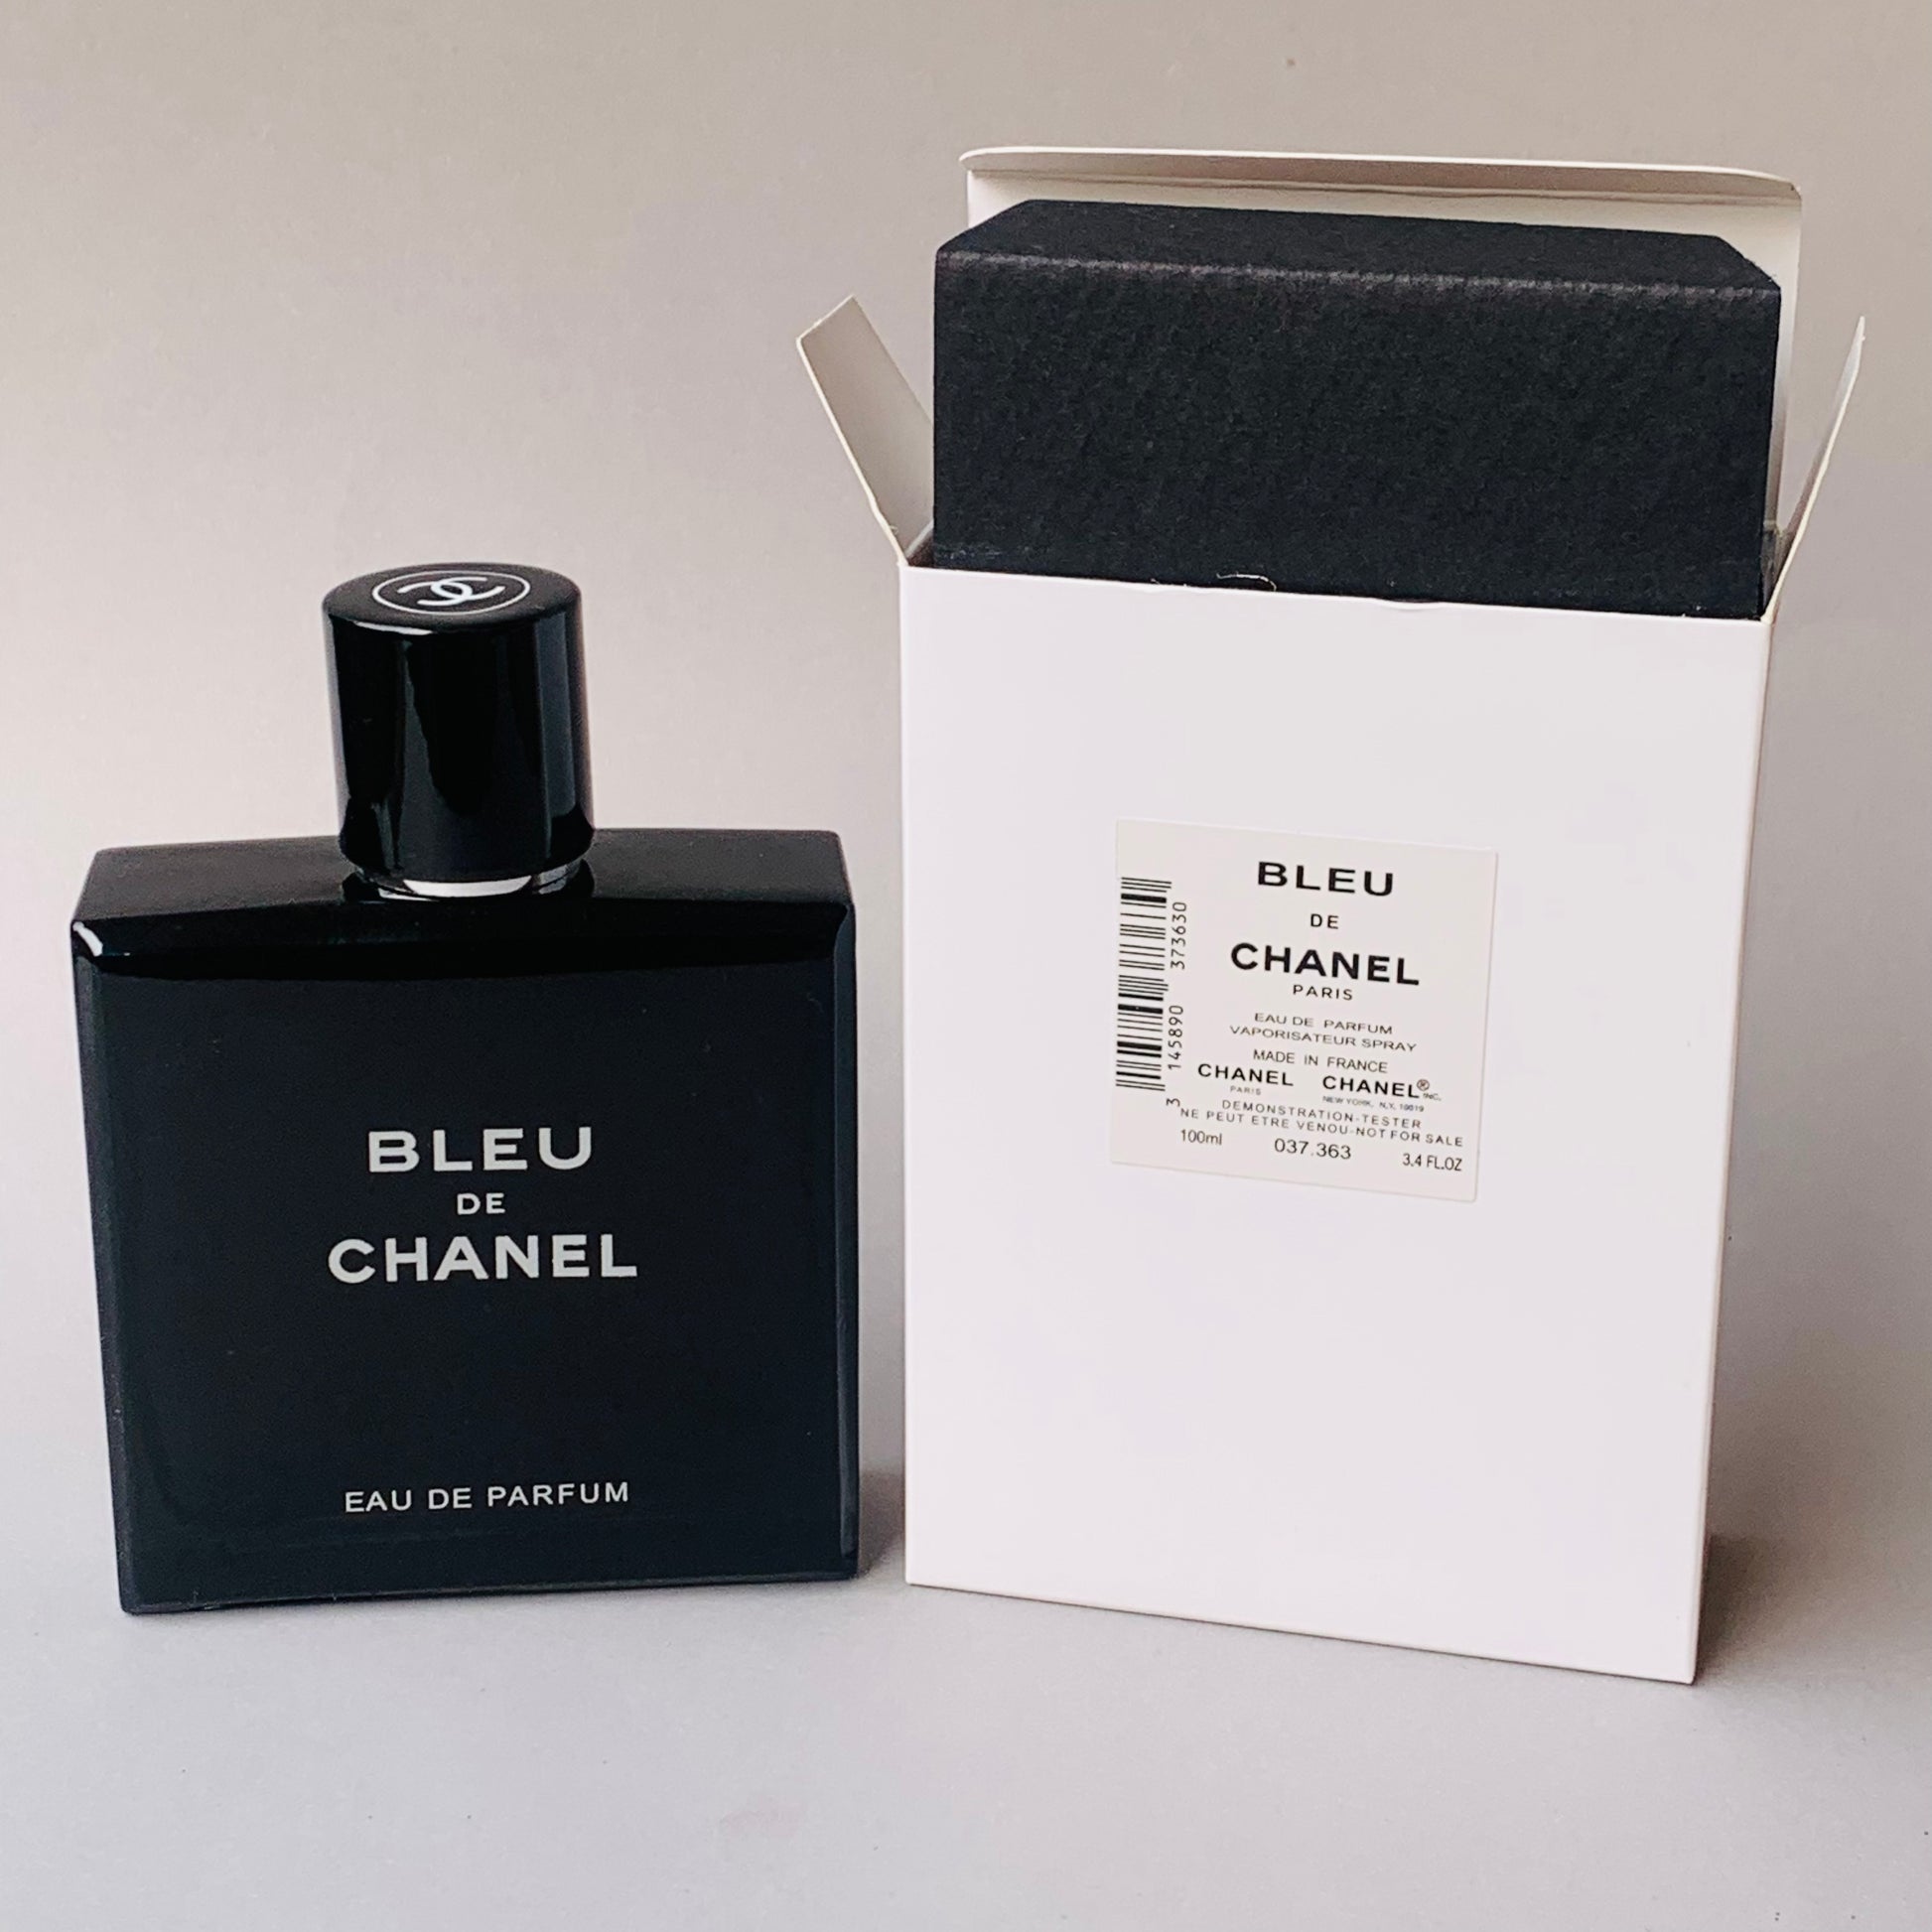 WTS: Bleu de Chanel EDT 100ml - Buy, Sell & Exchange - PakWheels Forums